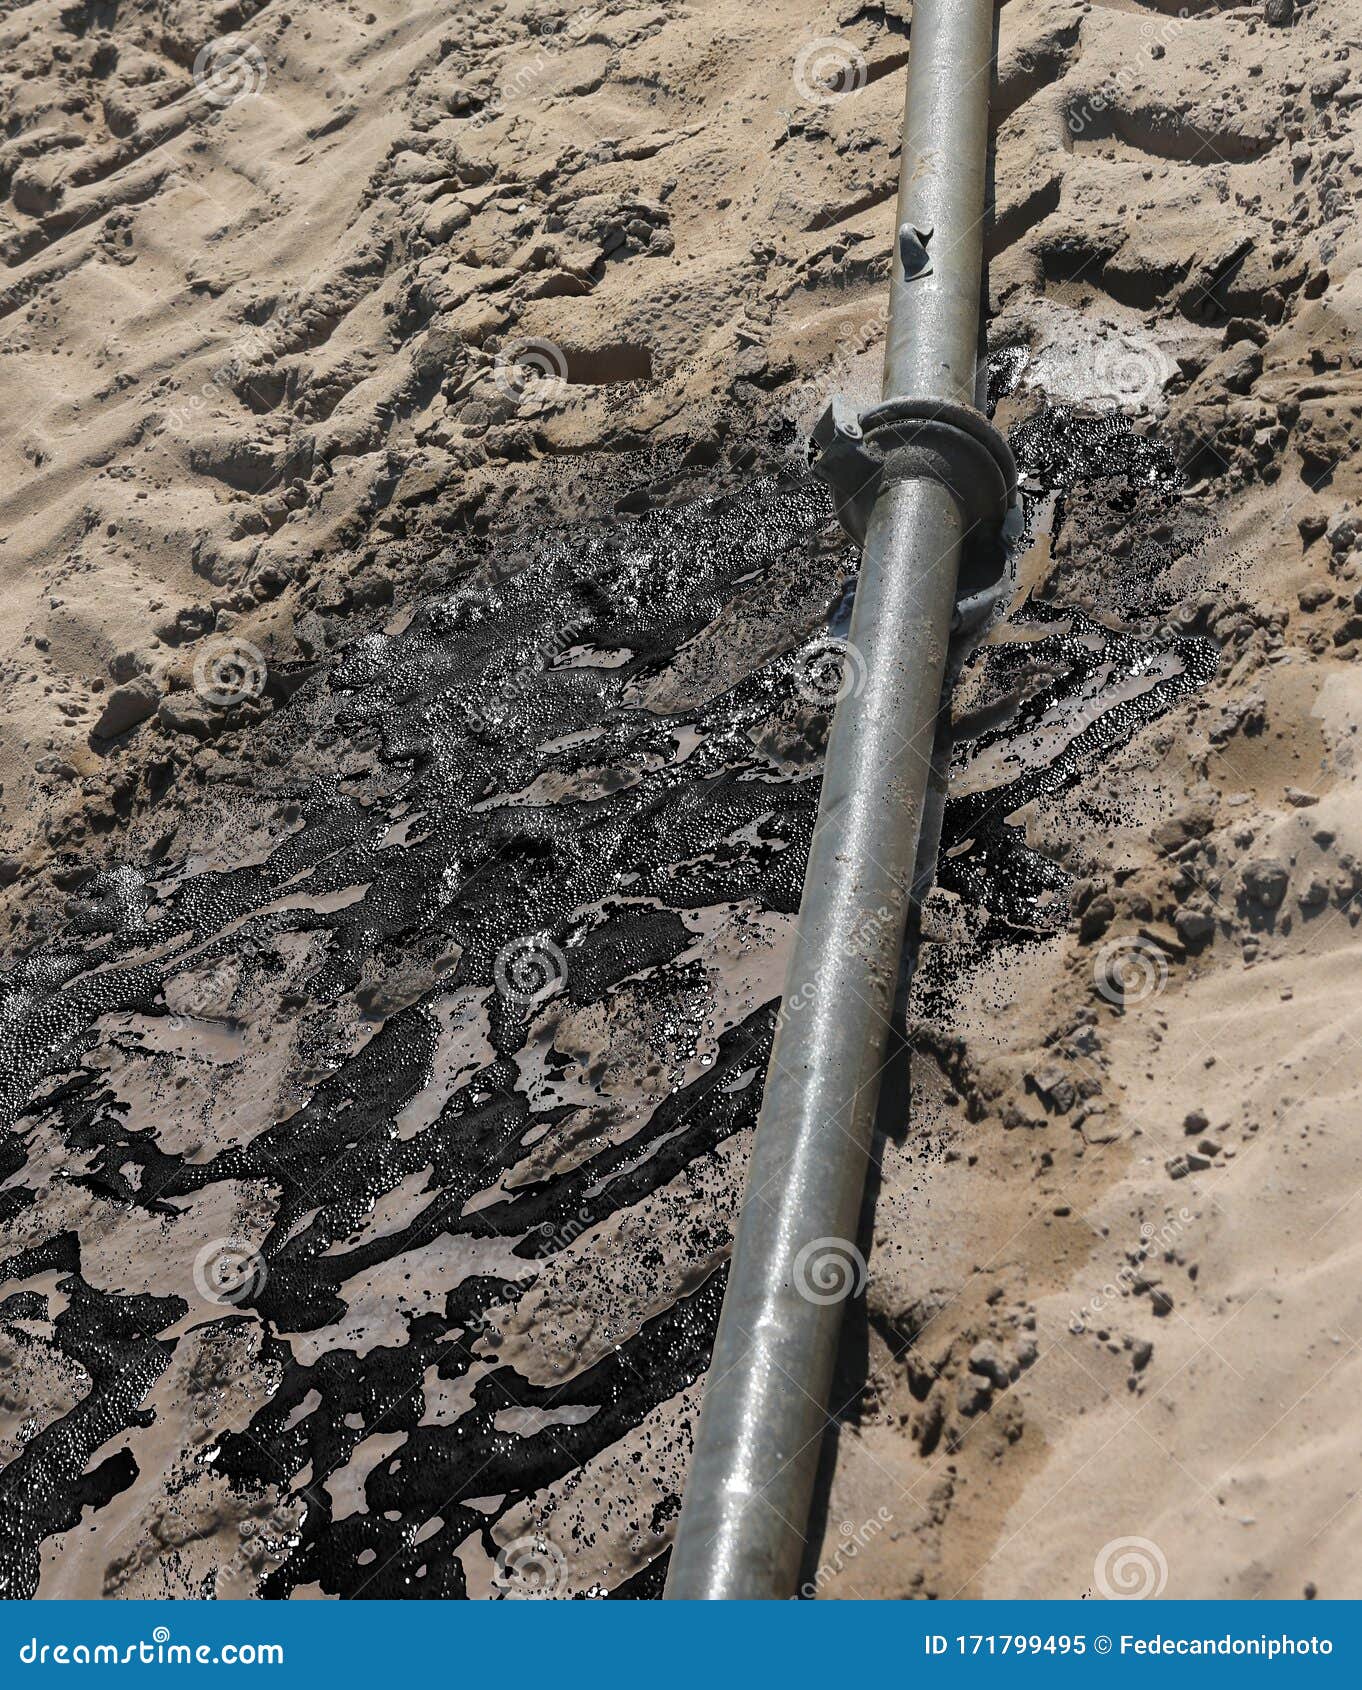 defective pipe leaks oil on a field